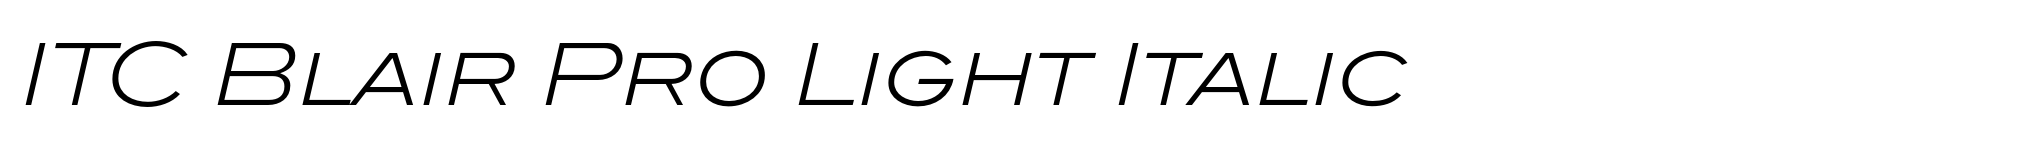 ITC Blair Pro Light Italic image